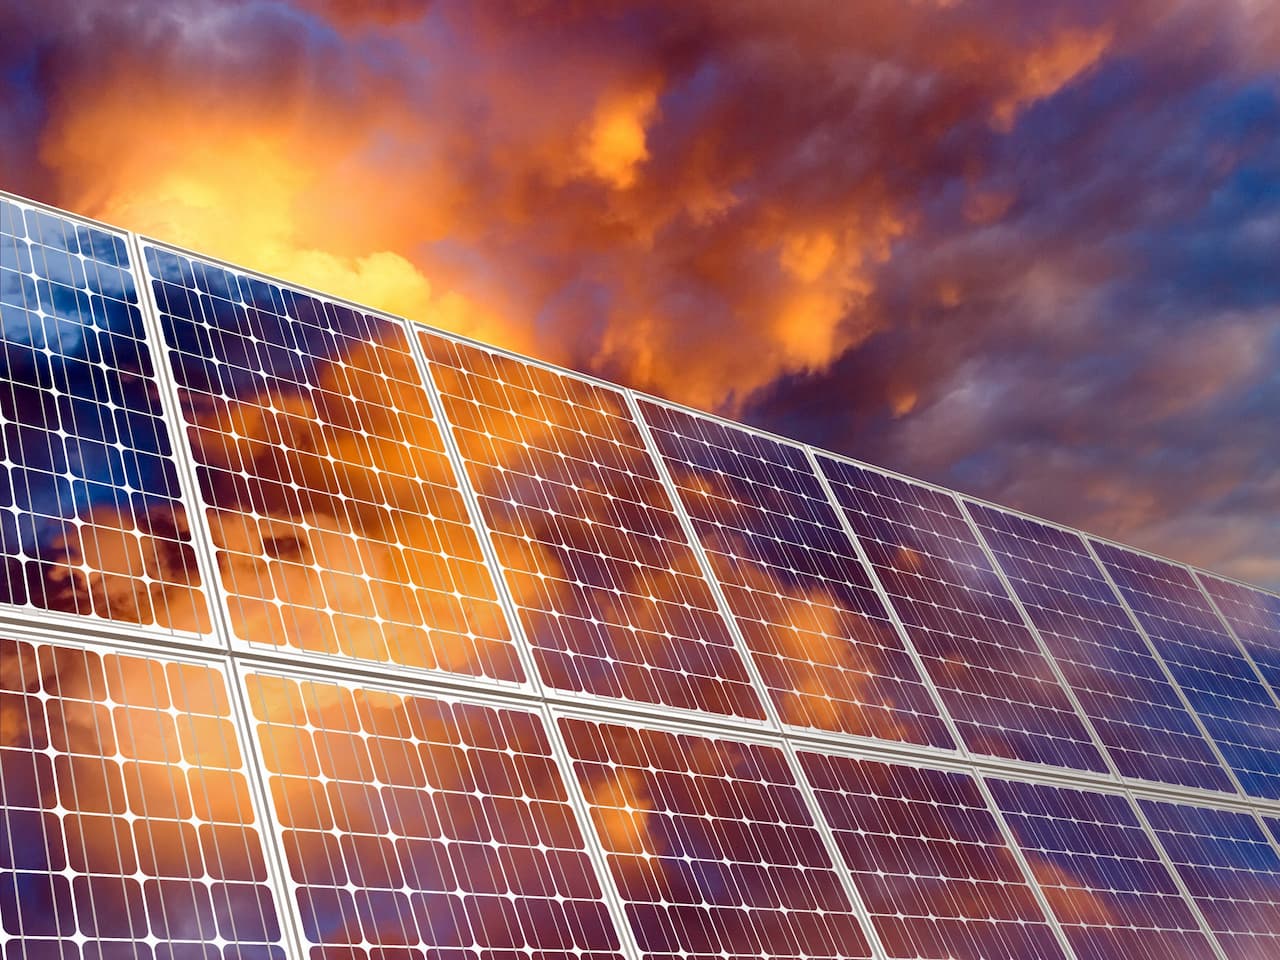 Perovskite Solar Cells: The Future of Solar Energy?